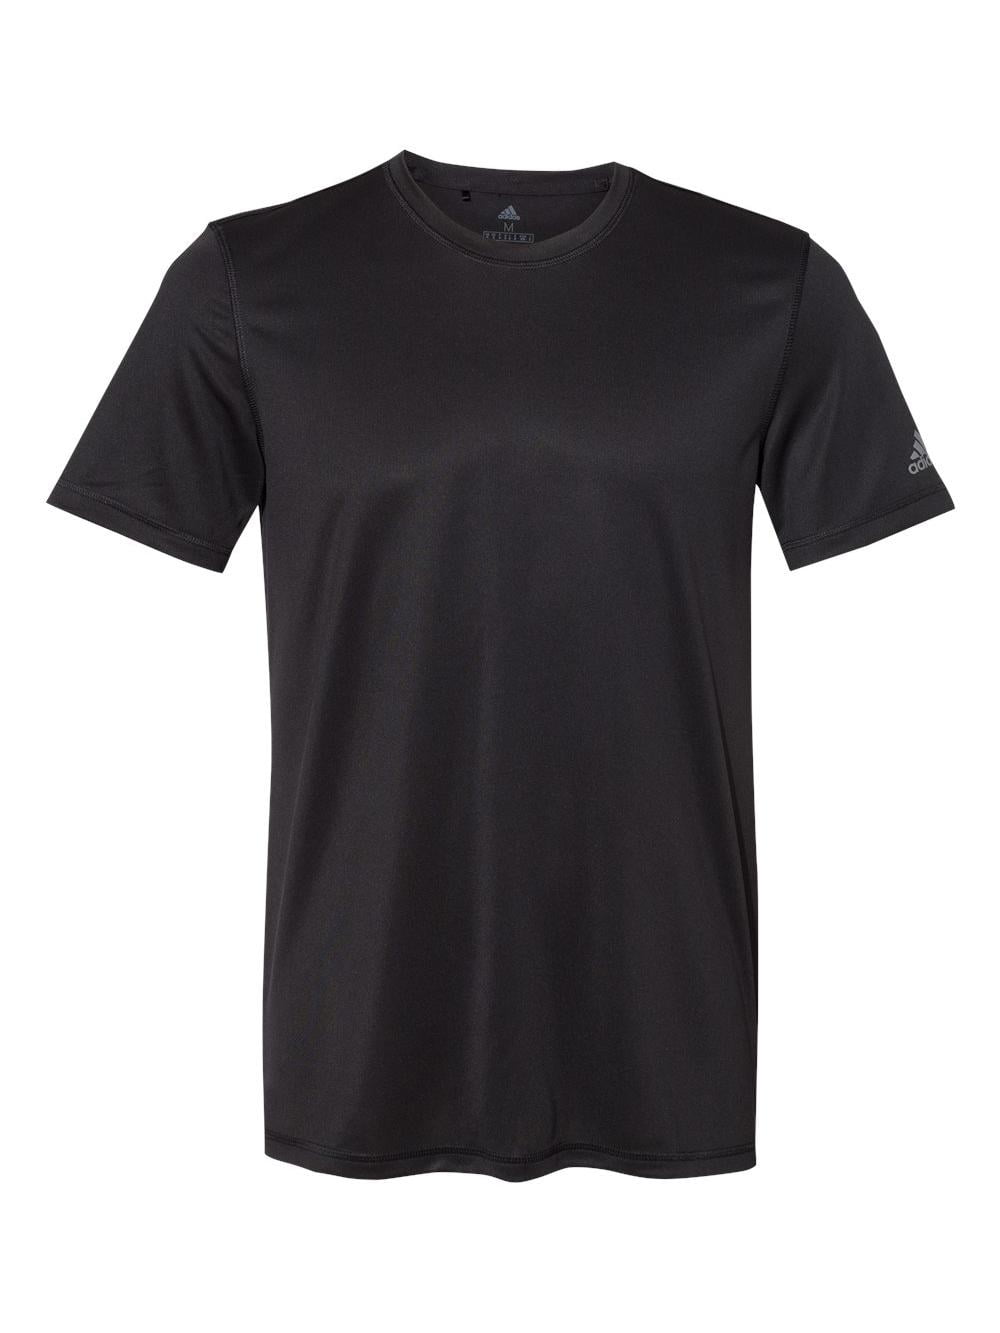 - - - A376 Size: Sport T-Shirt Black - Adidas 3XL